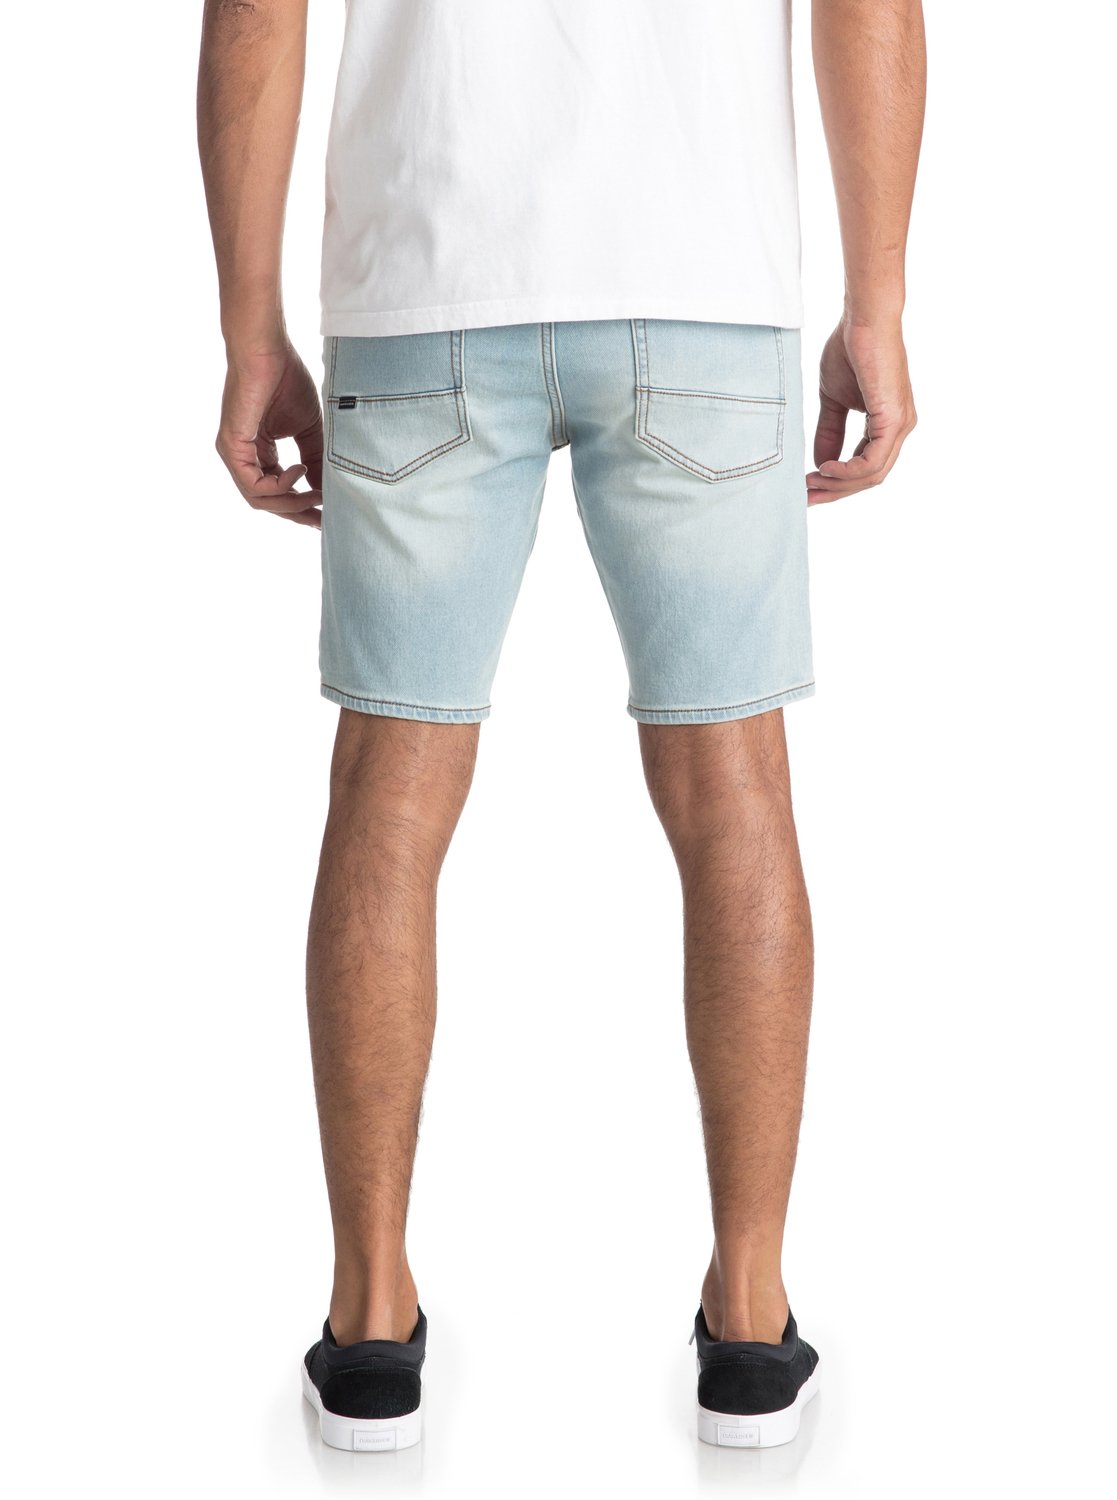 Revolver Bleached Surf - Denim Shorts for Men 3613373465108 | Quiksilver